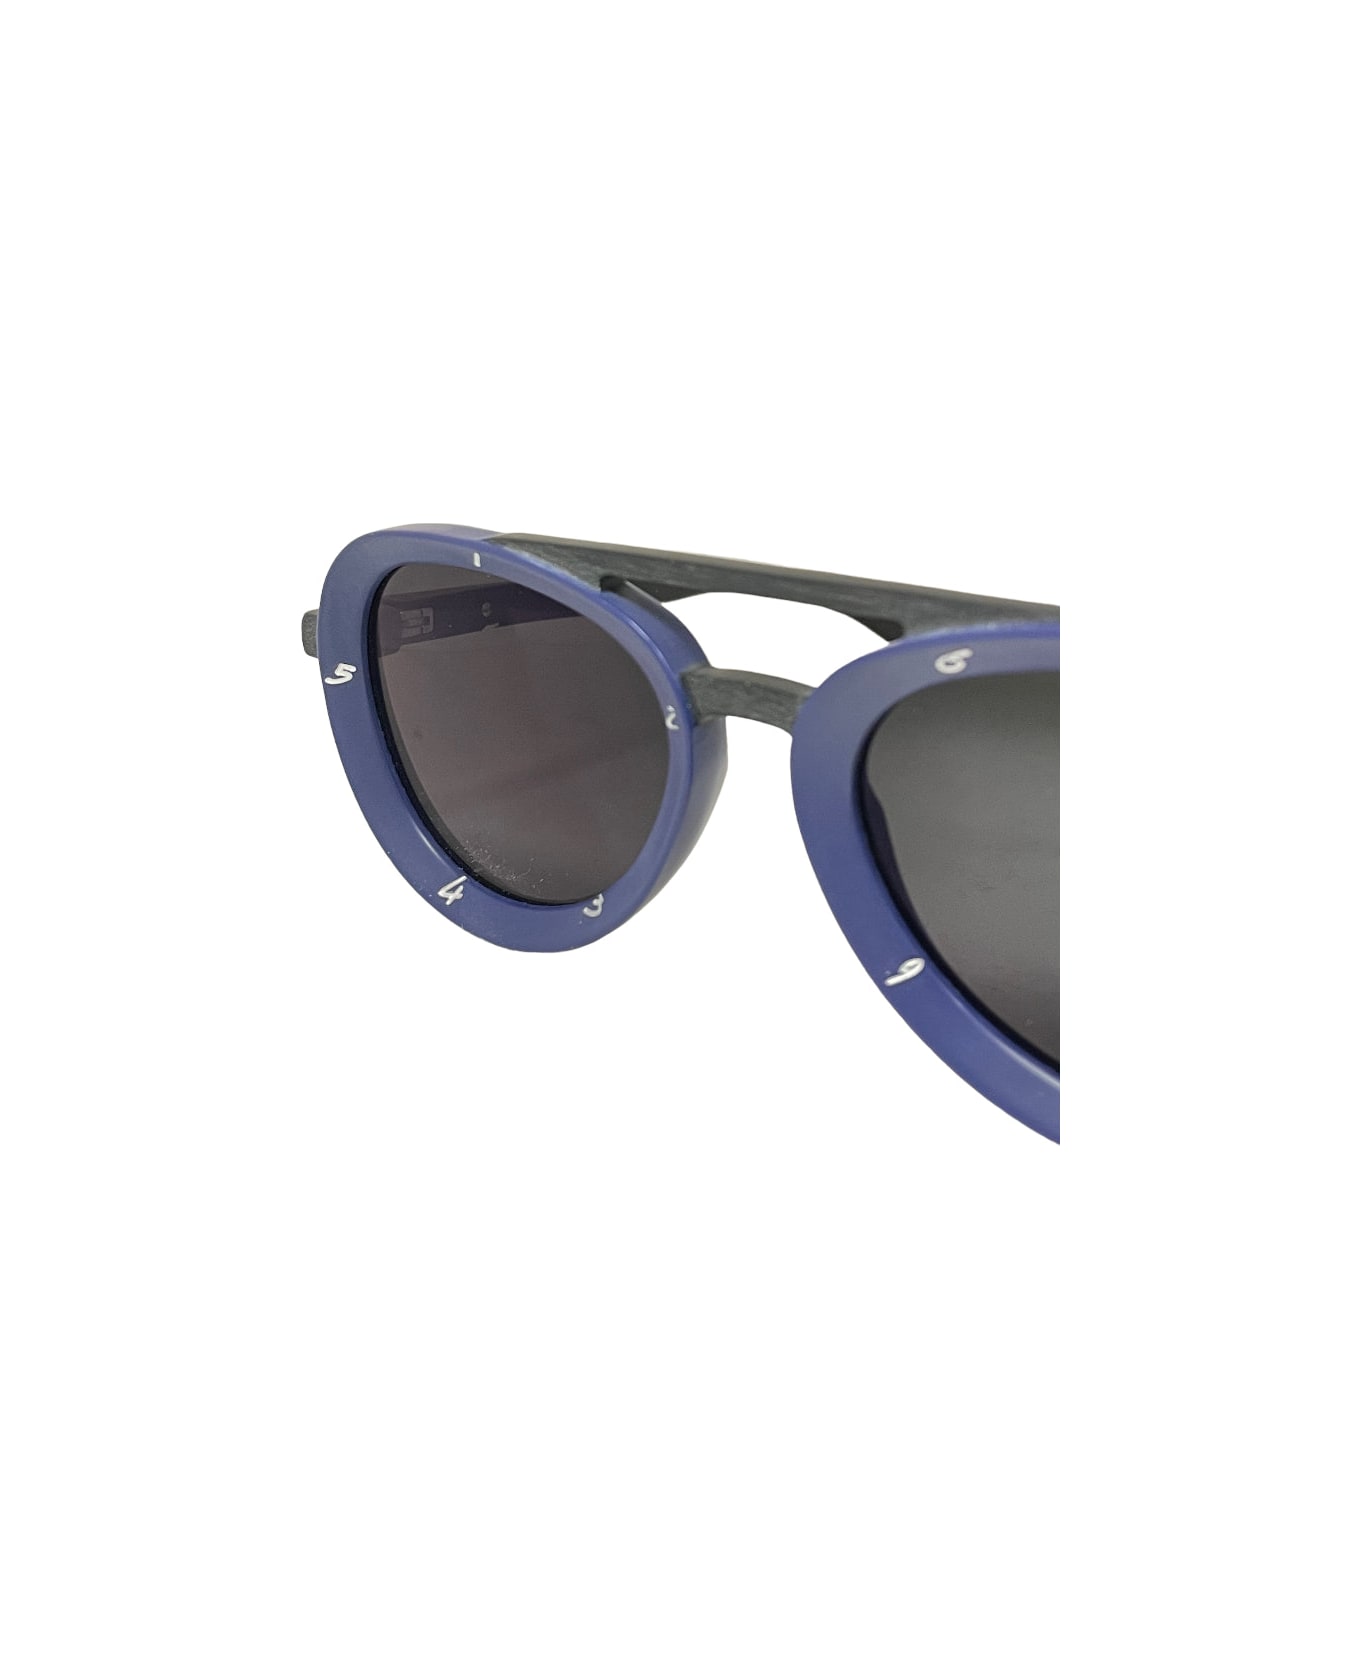 Piero Massaro Pm373 - Matte Blue Sunglasses